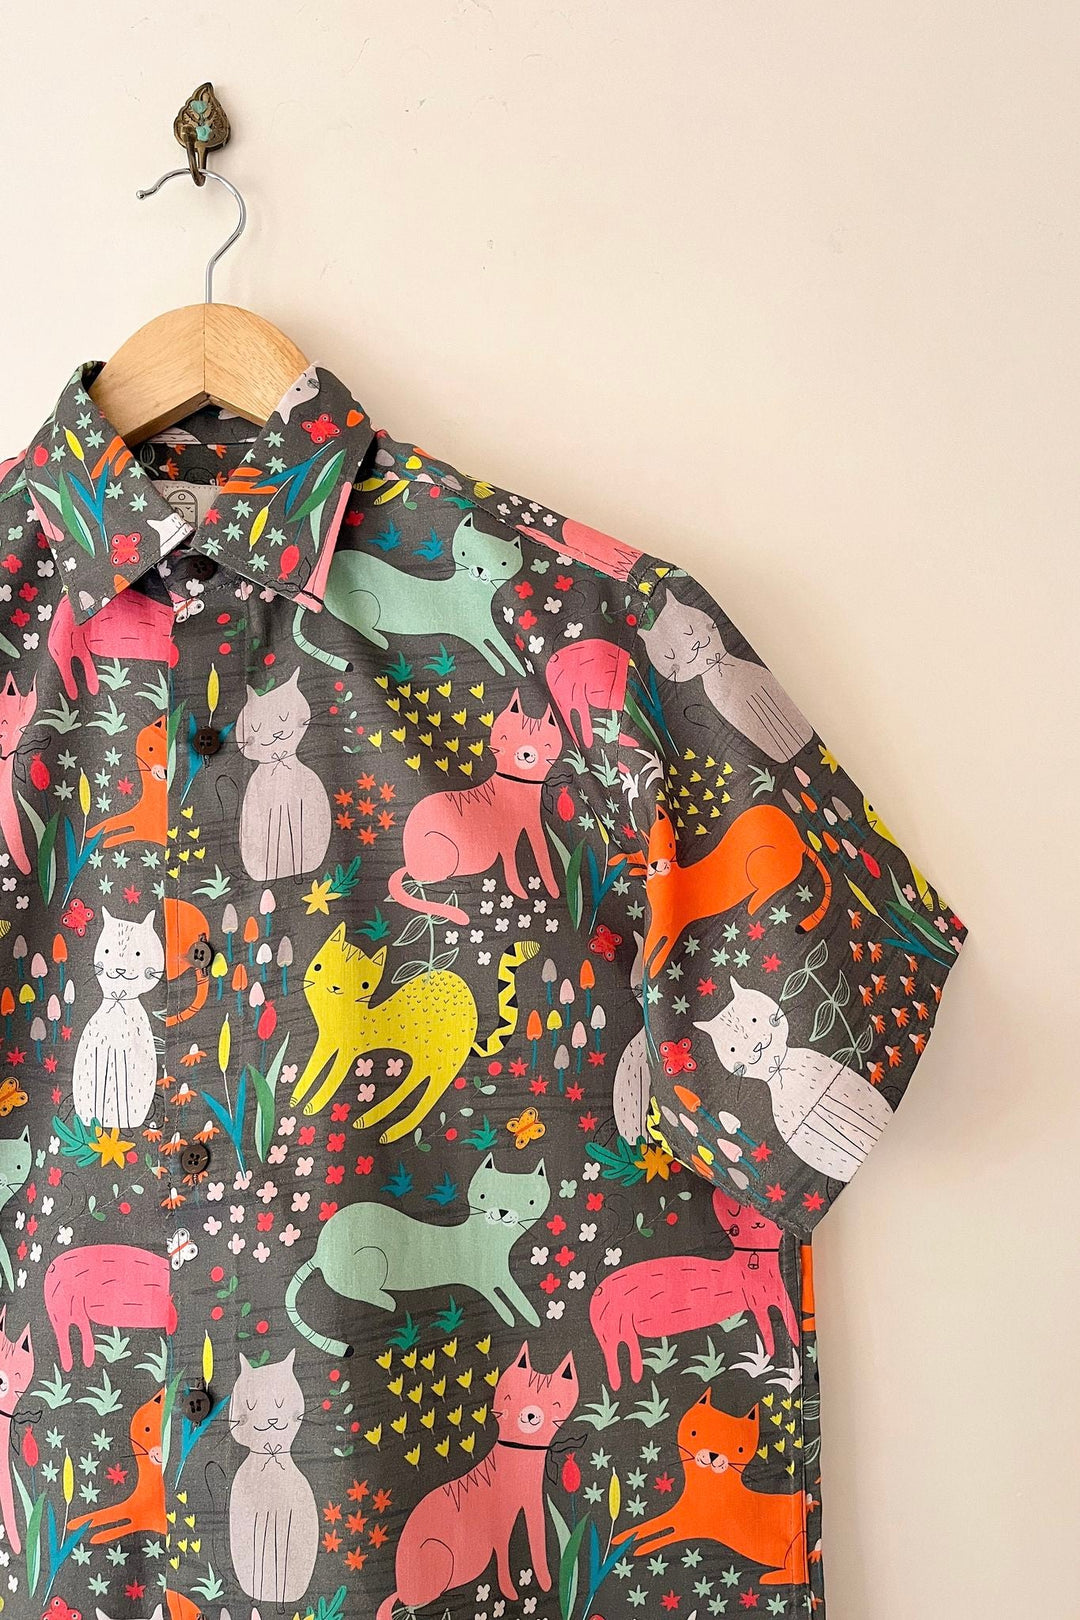 Animal print cotton shirt by Siesta o'Clock